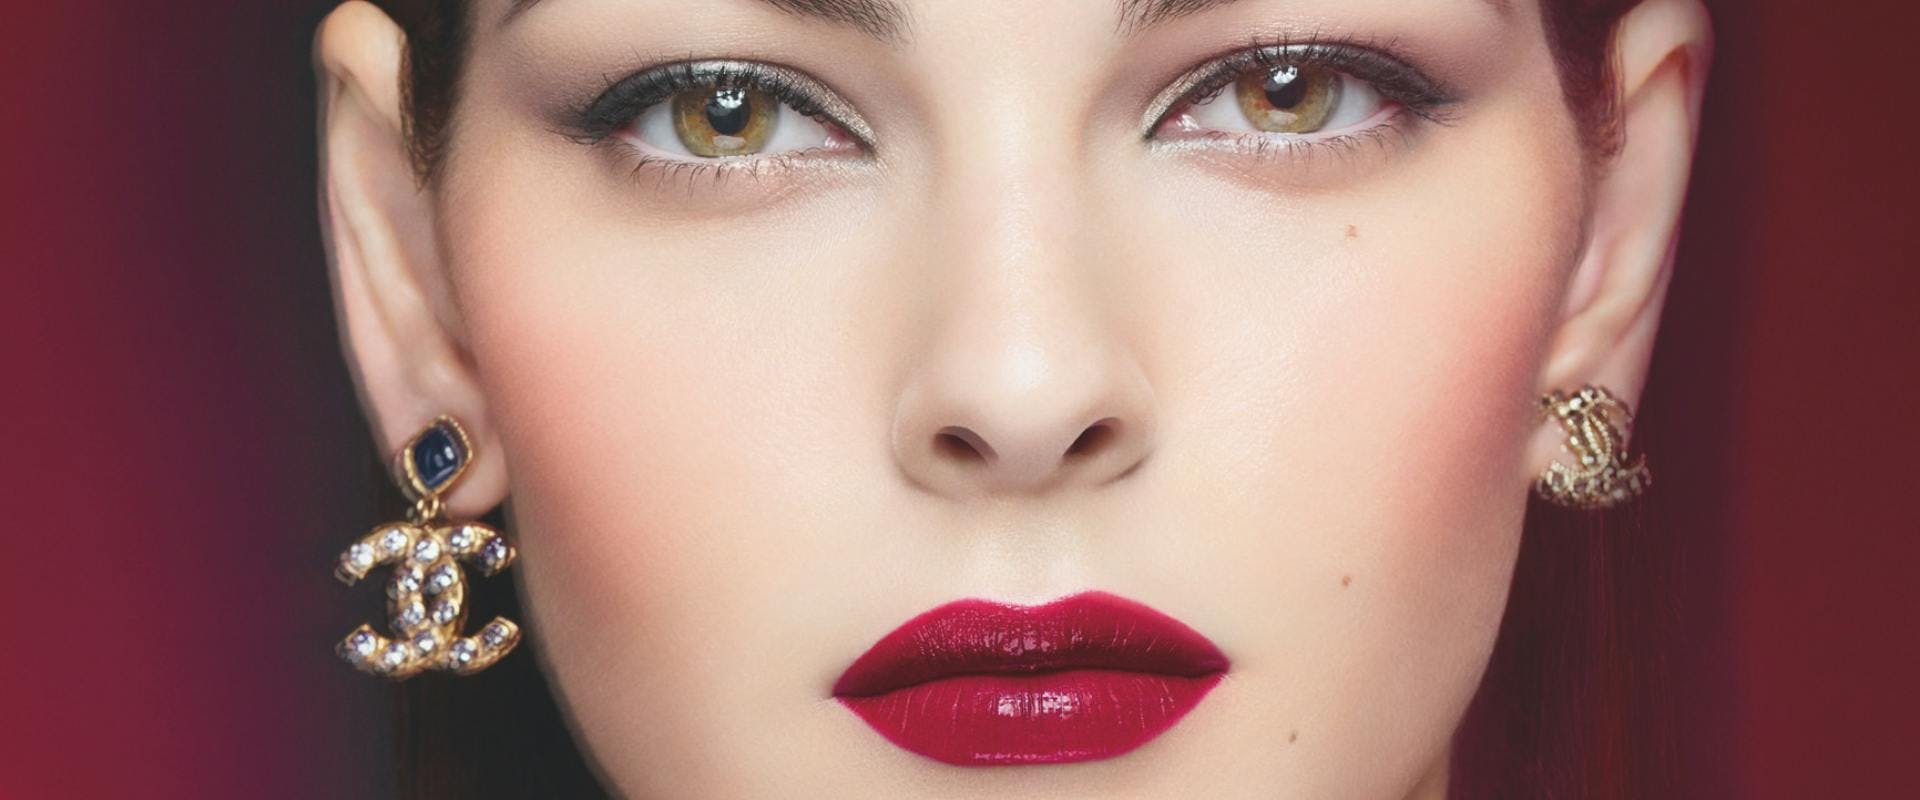 skin person human mouth lip lipstick cosmetics face